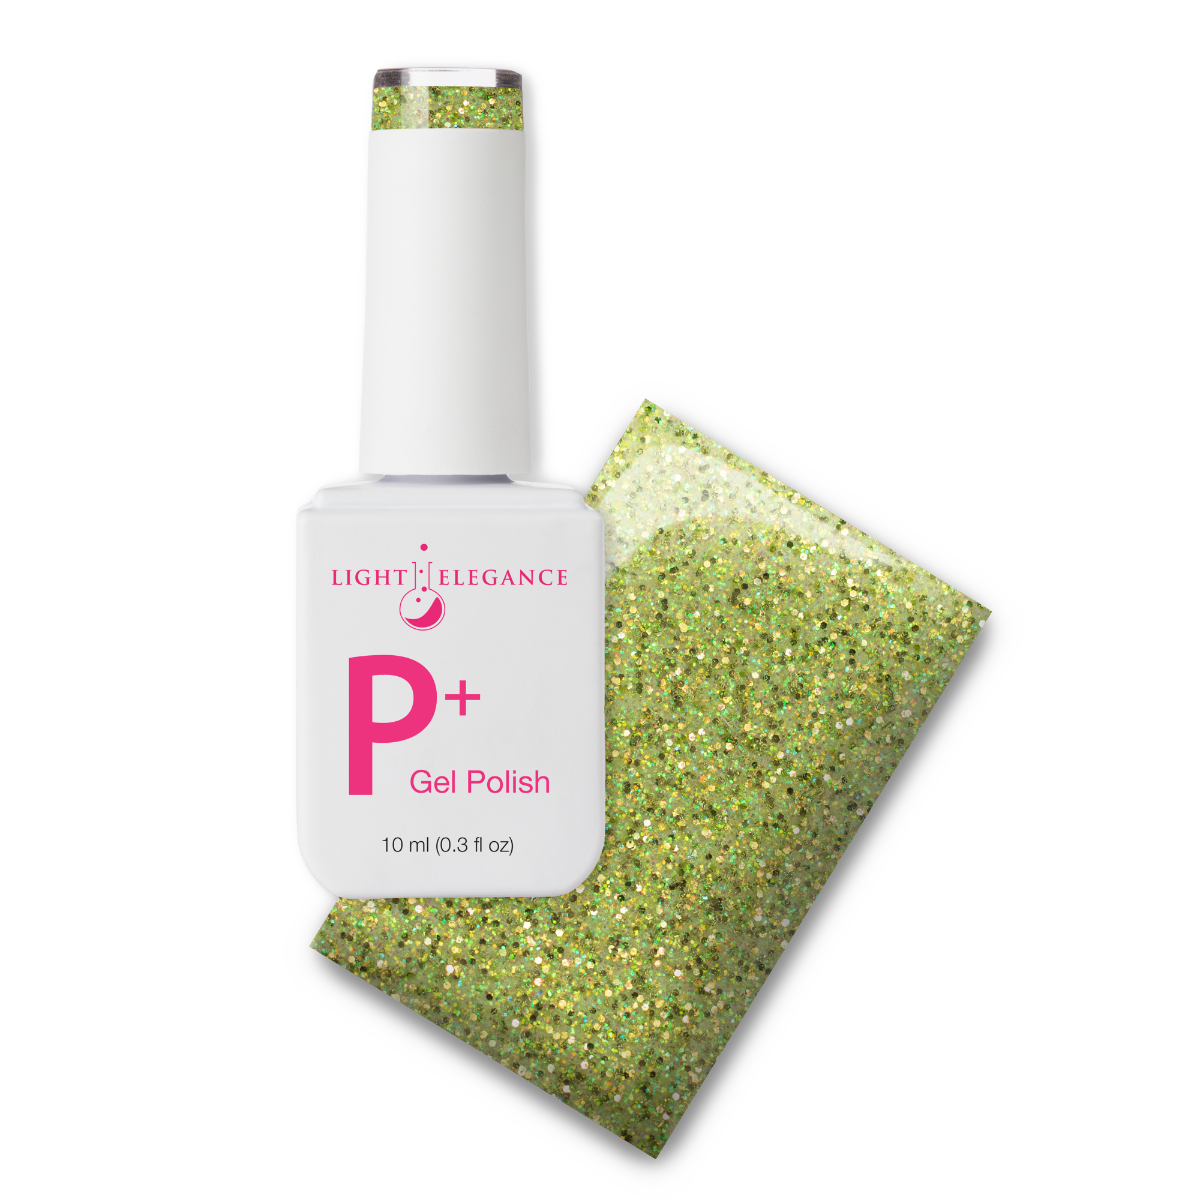 Light Elegance P+ Soak Off Glitter Gel - Peace and Love :: New Packaging